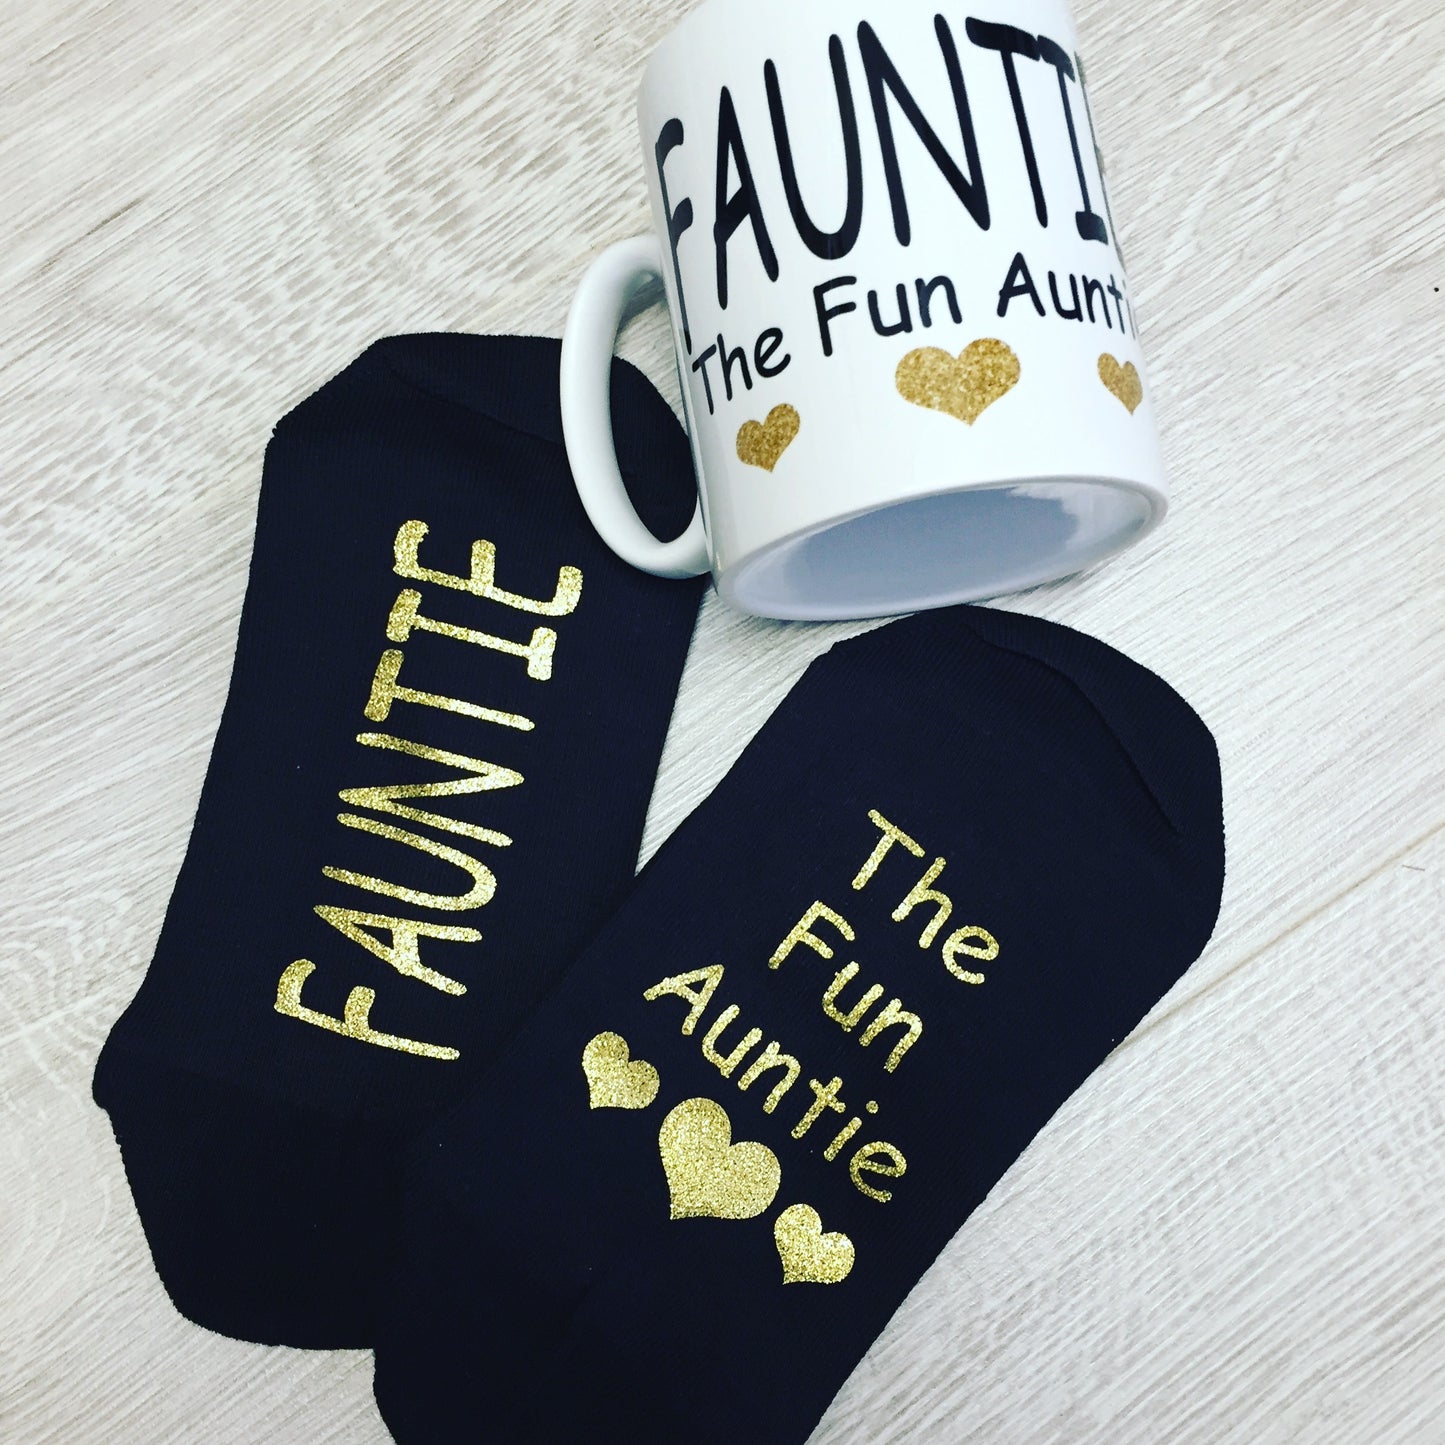 Fauntie The fun Auntie Mug and Socks Set